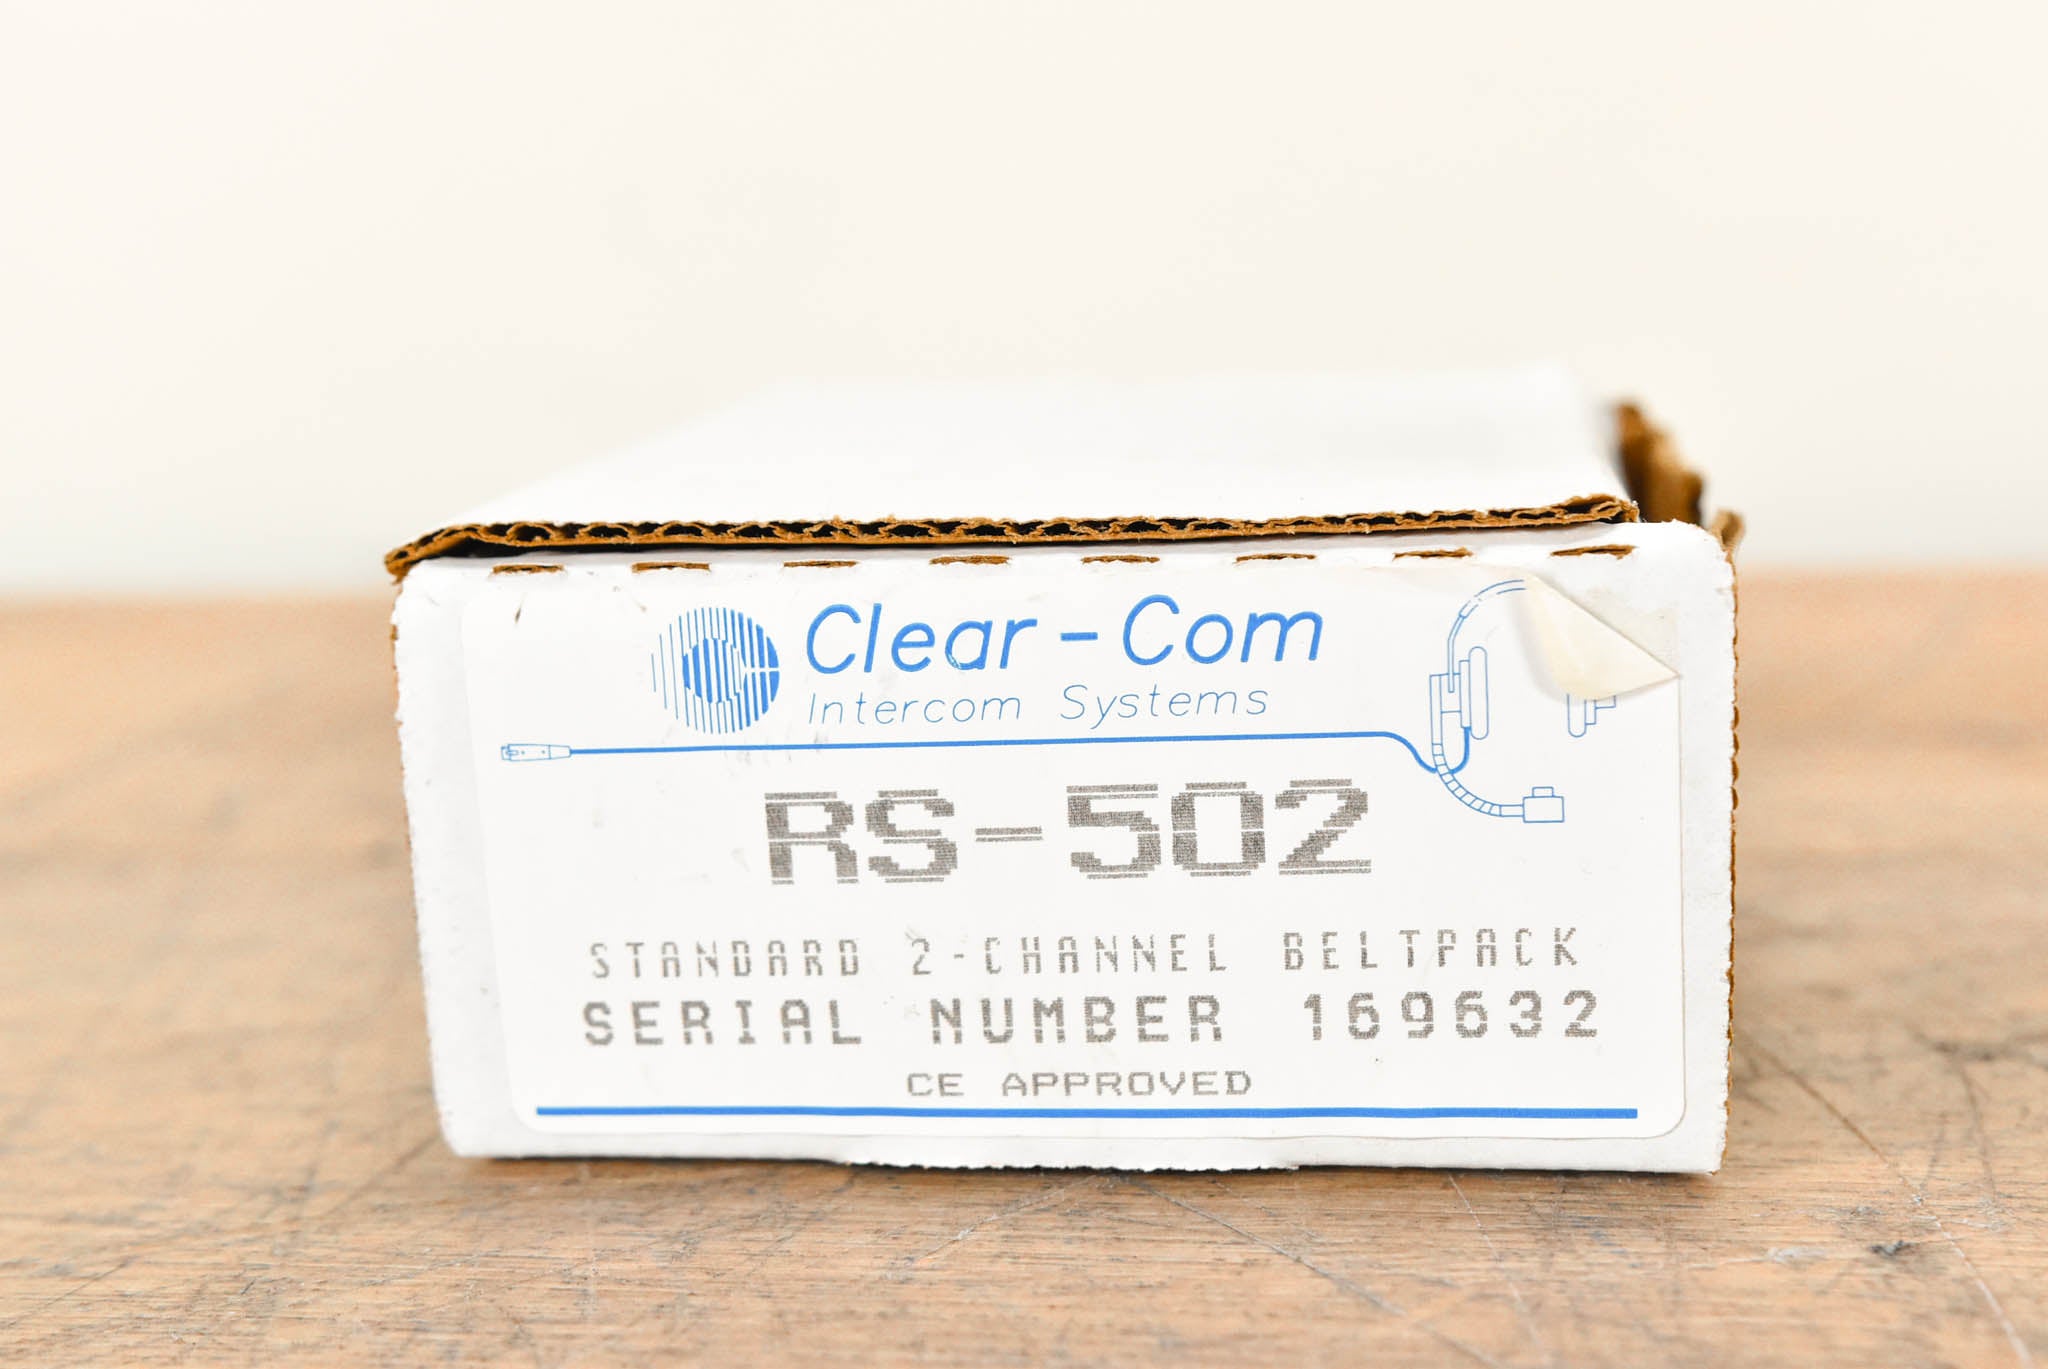 Clear-Com RS-502 Two-Channel Intercom Belt Pack